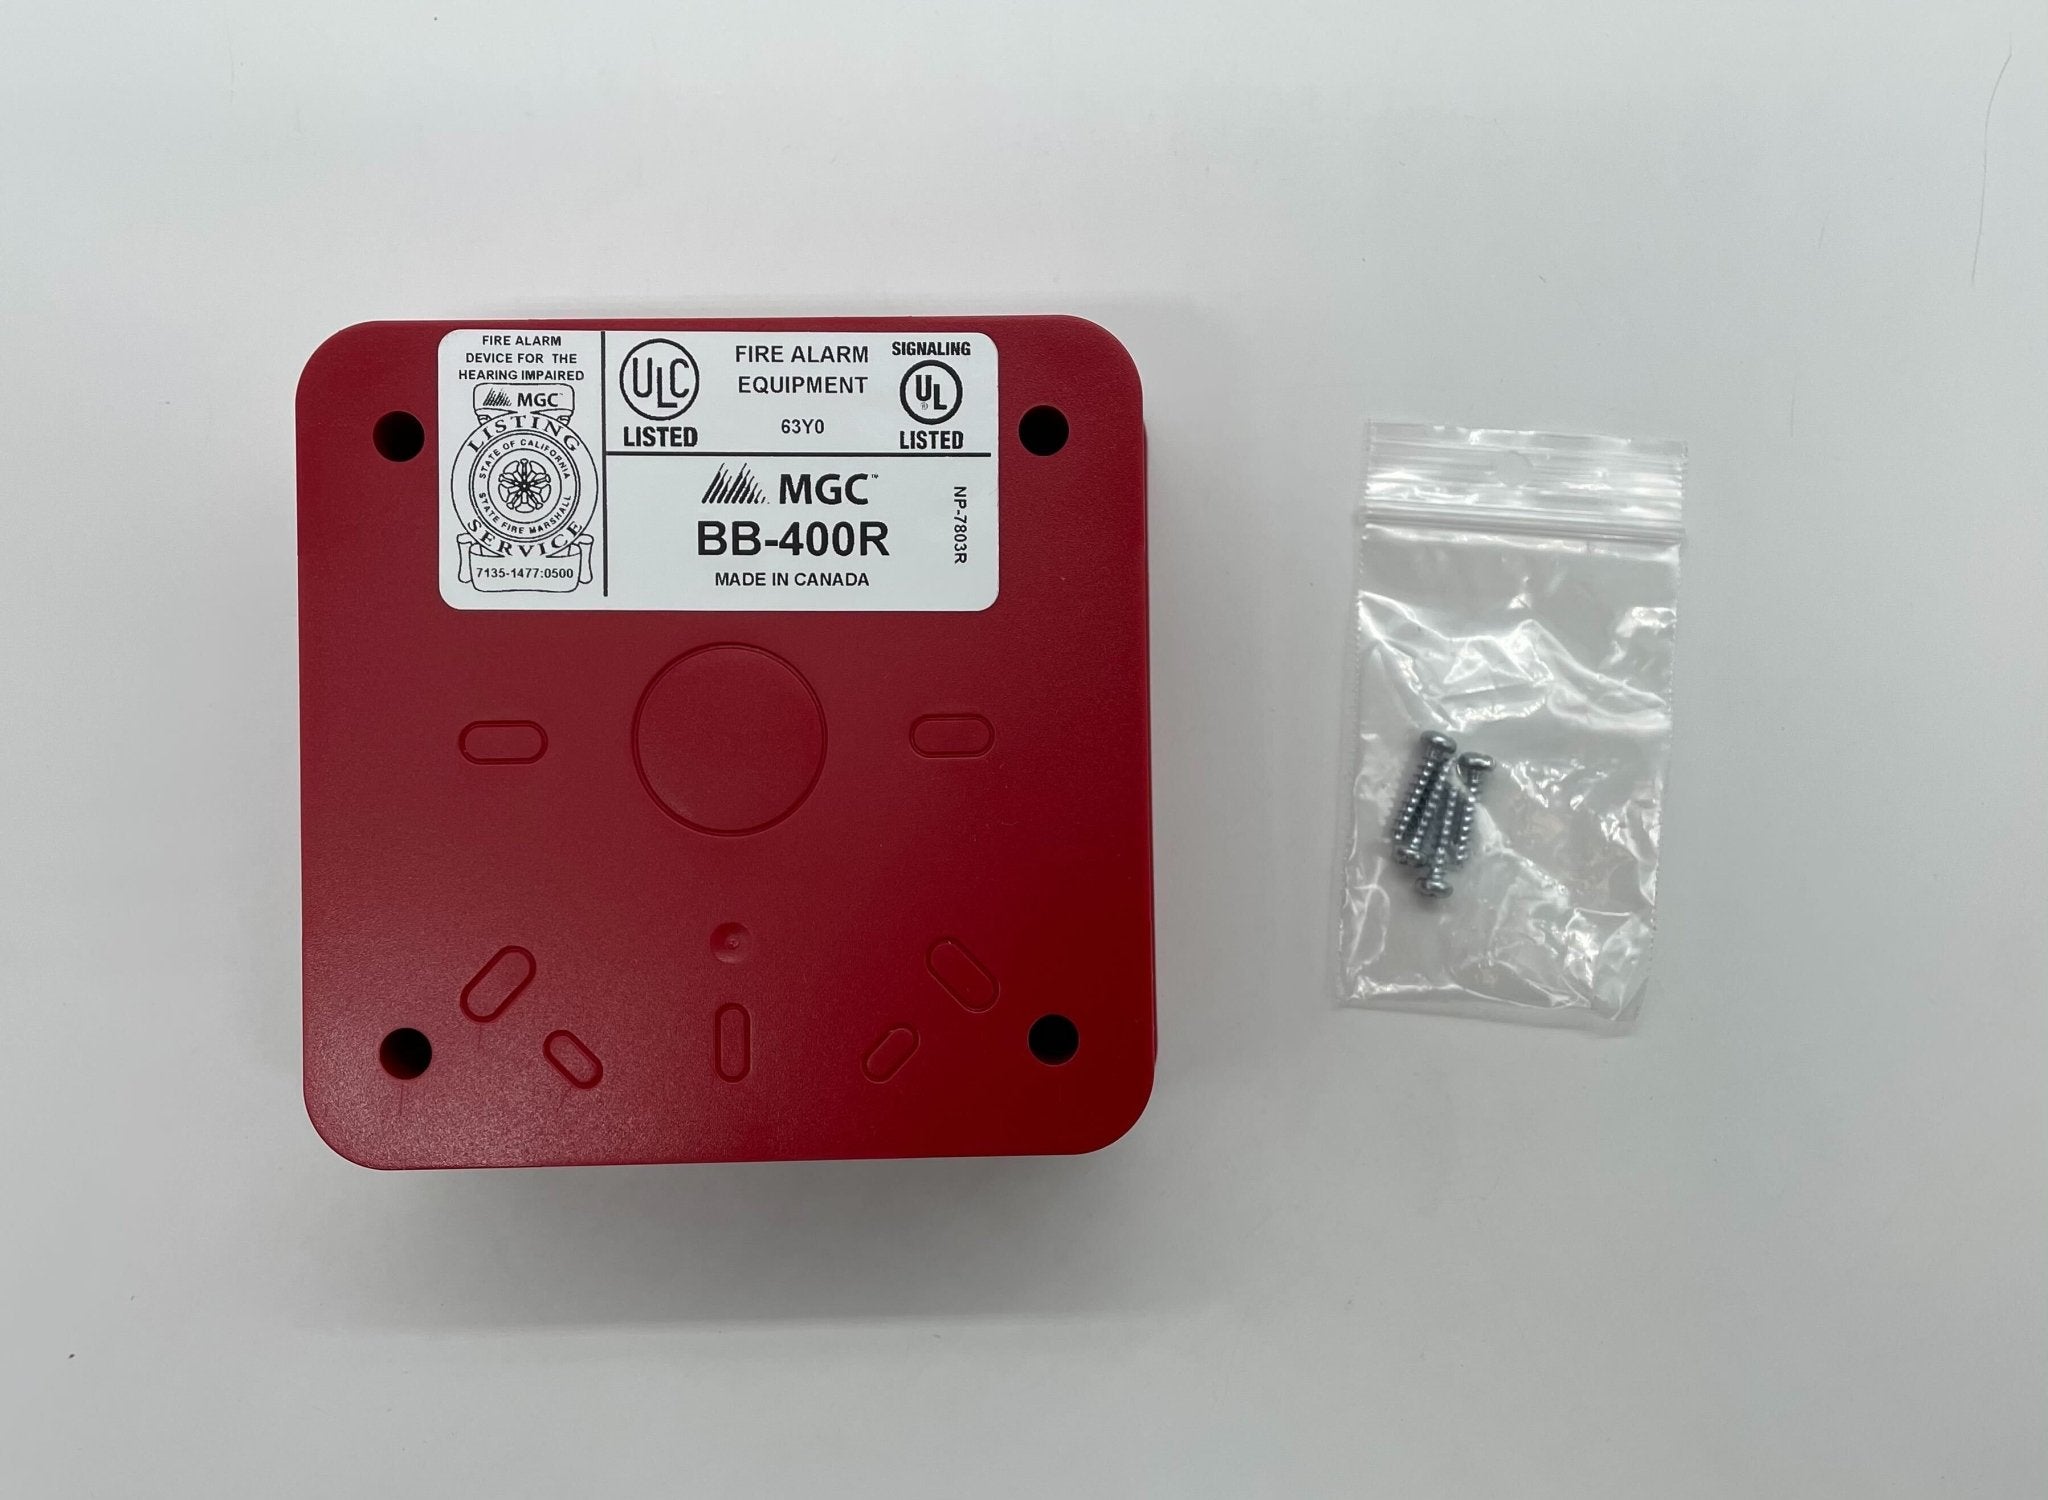 Mircom BB-400R - The Fire Alarm Supplier